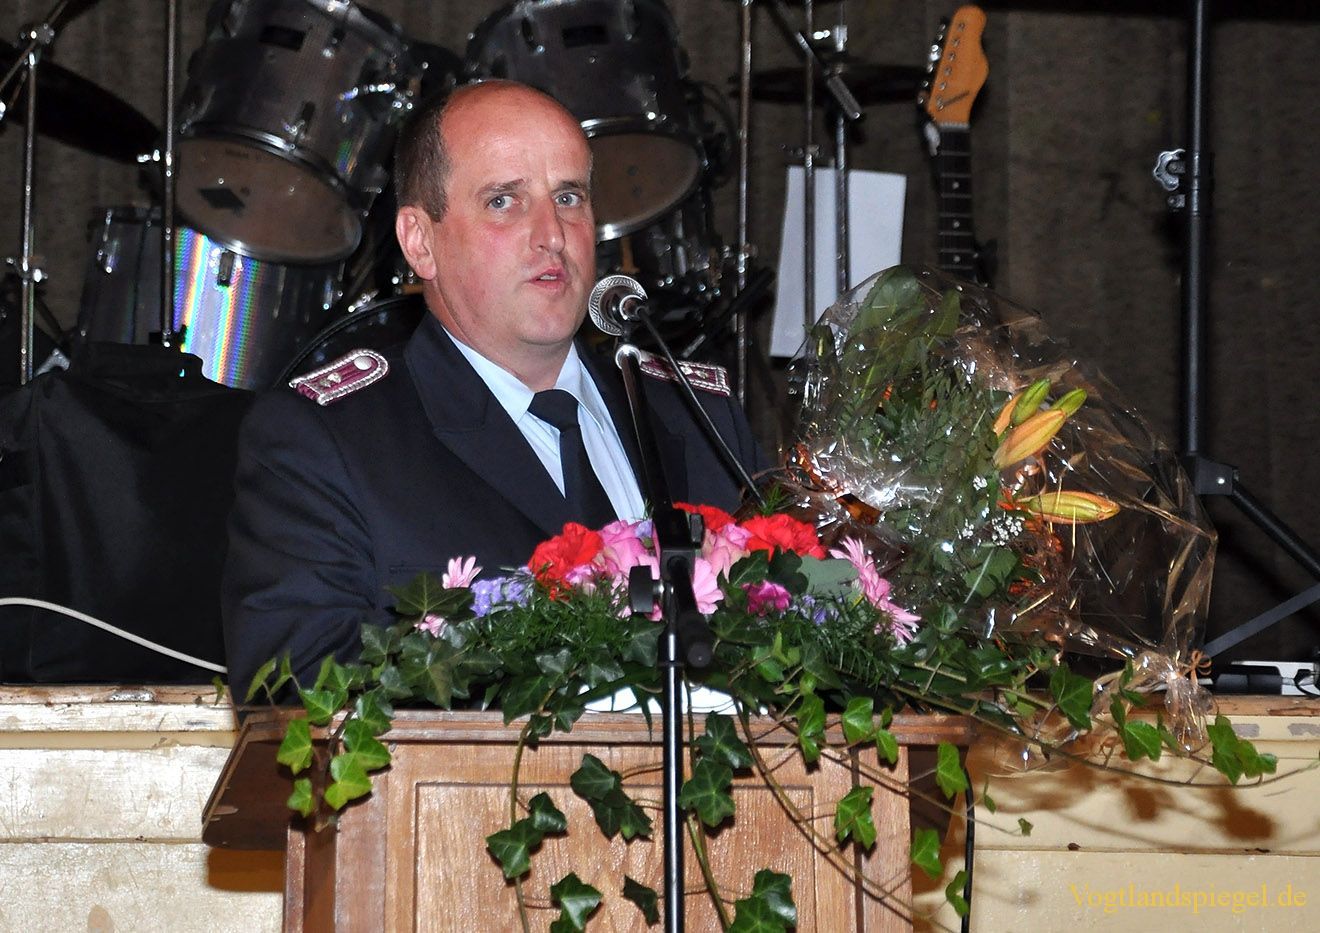 Mohlsdorfer Feuerwehr feiert 100-jähriges Jubiläum